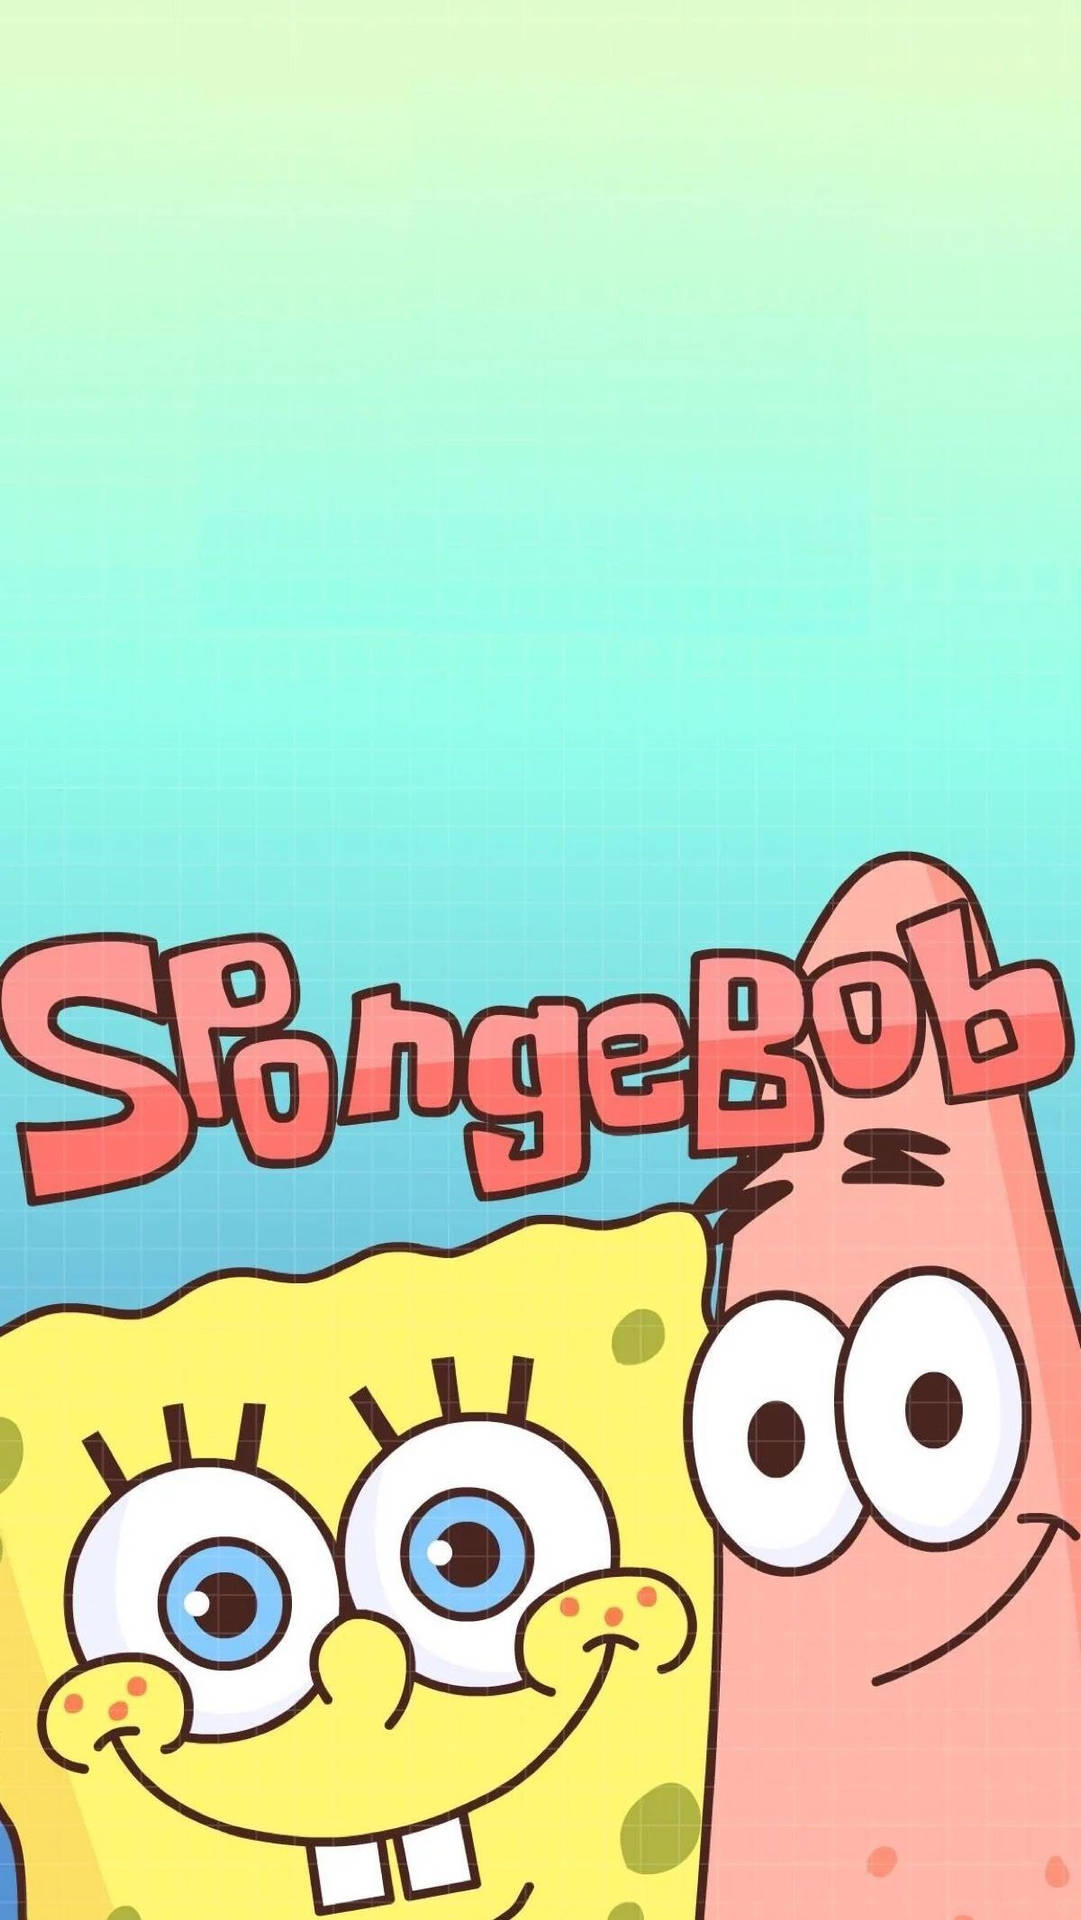 Looking Cool Spongebob Style! Background